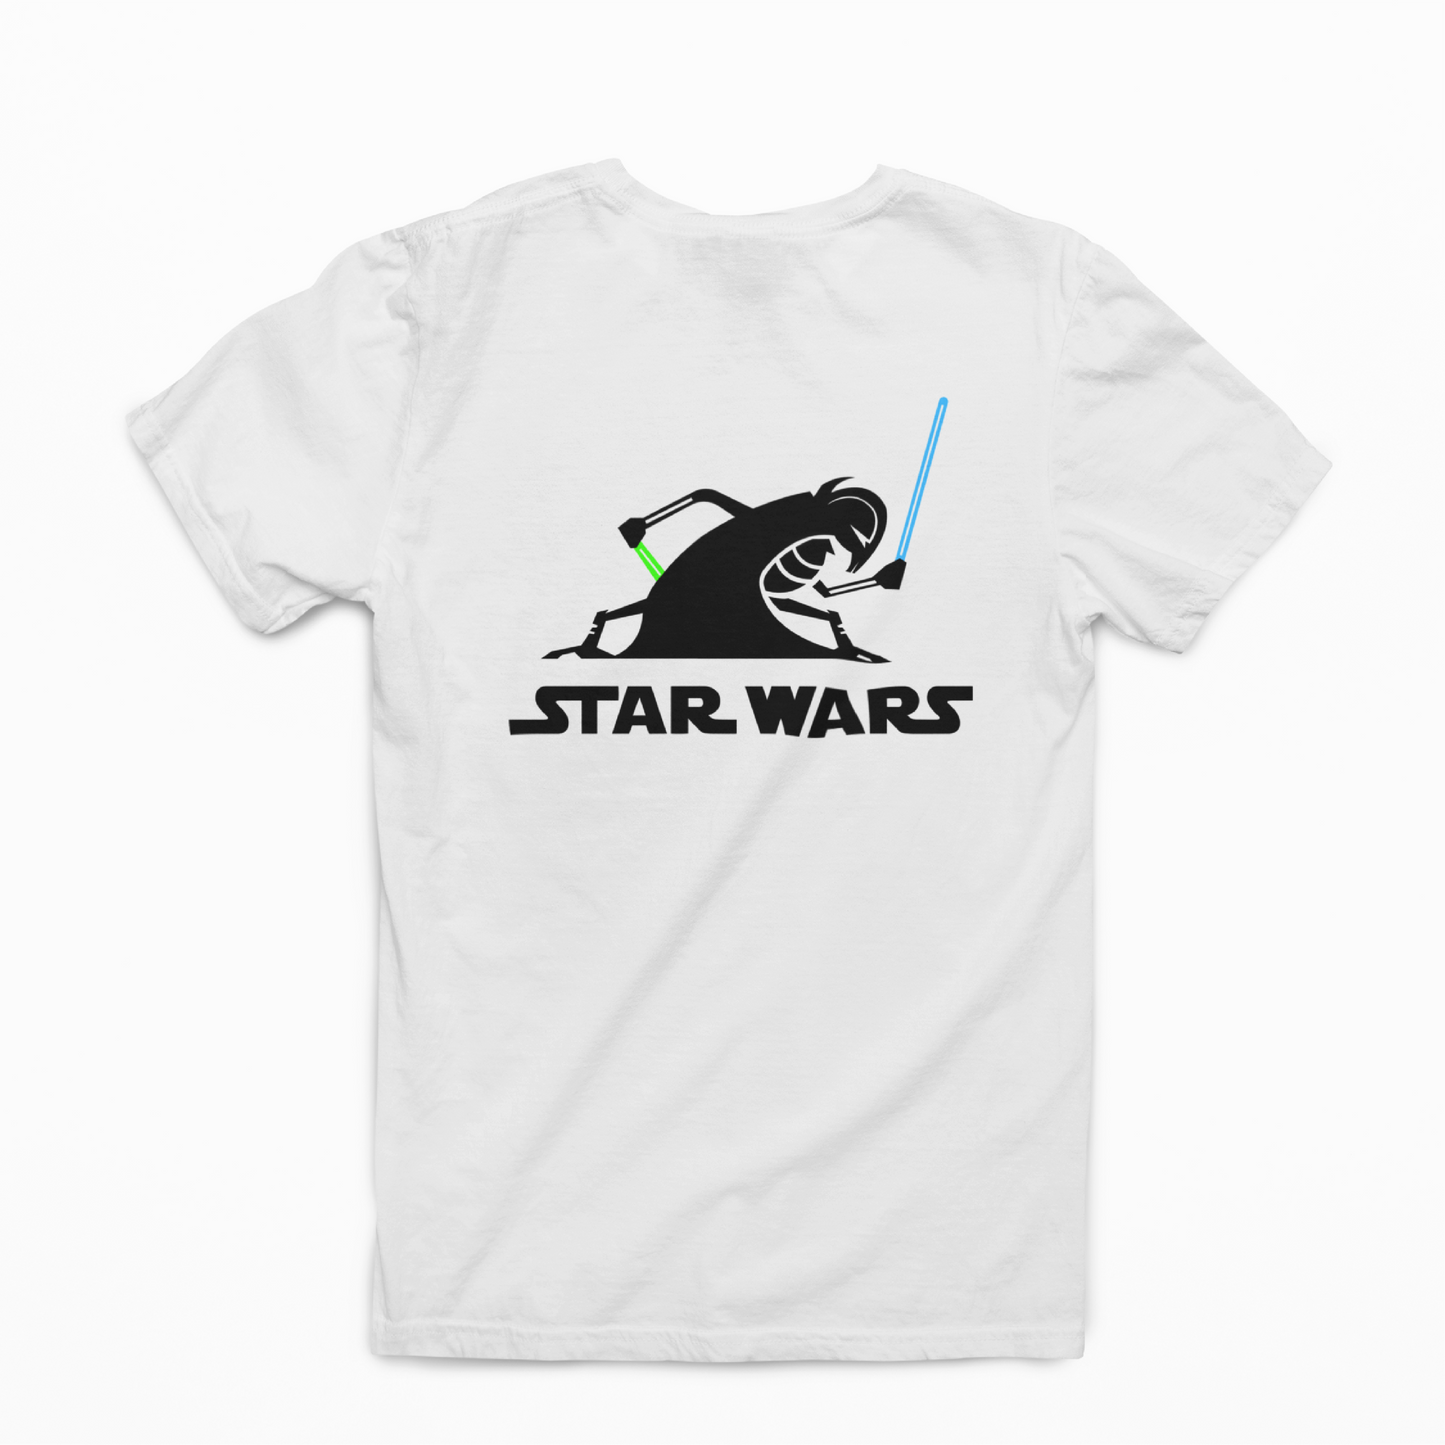 General Grievous Camisa Star Wars